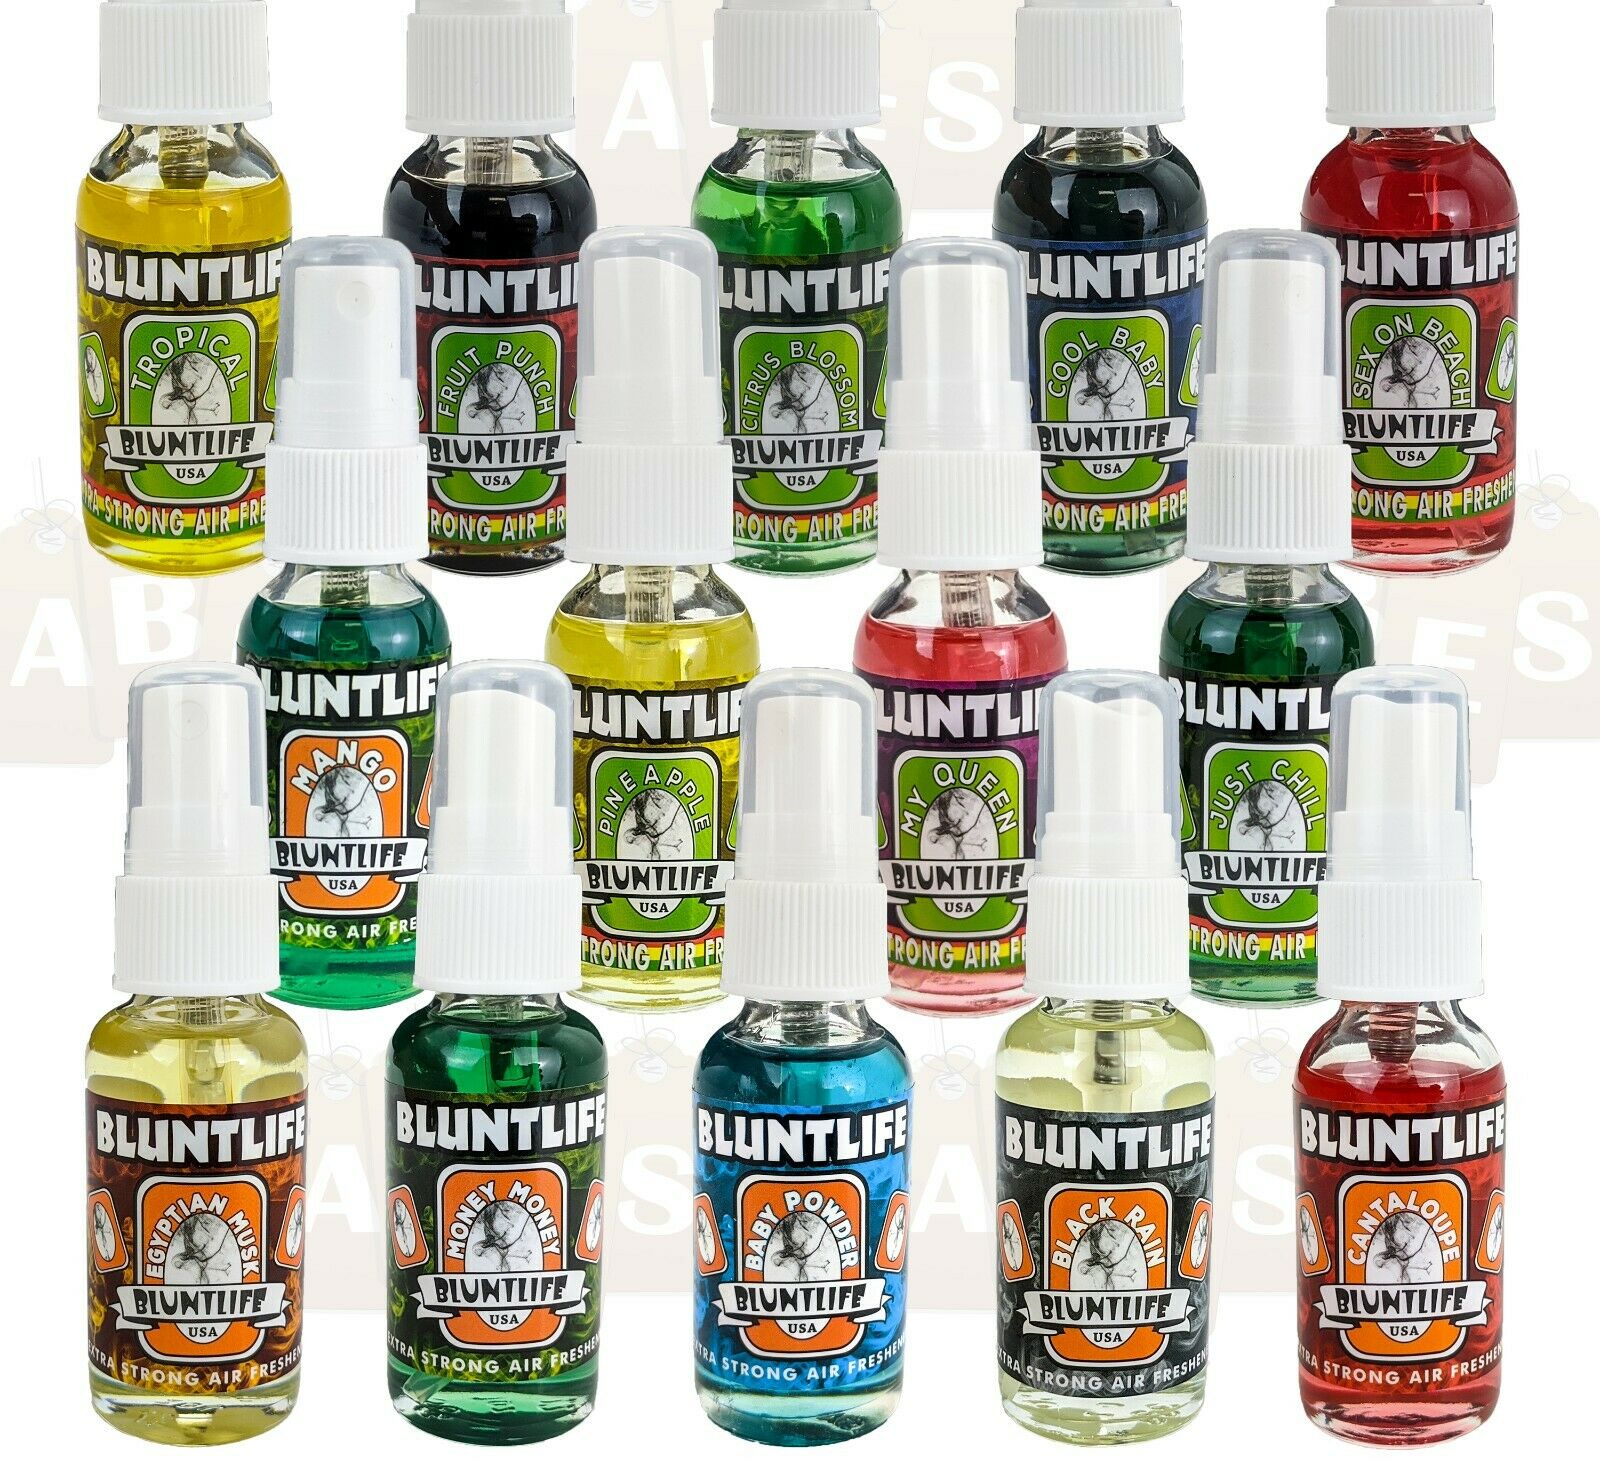 Bluntlife Blunt Life Usa Extra Strong Spray, Home & Car Air Freshener, 1oz